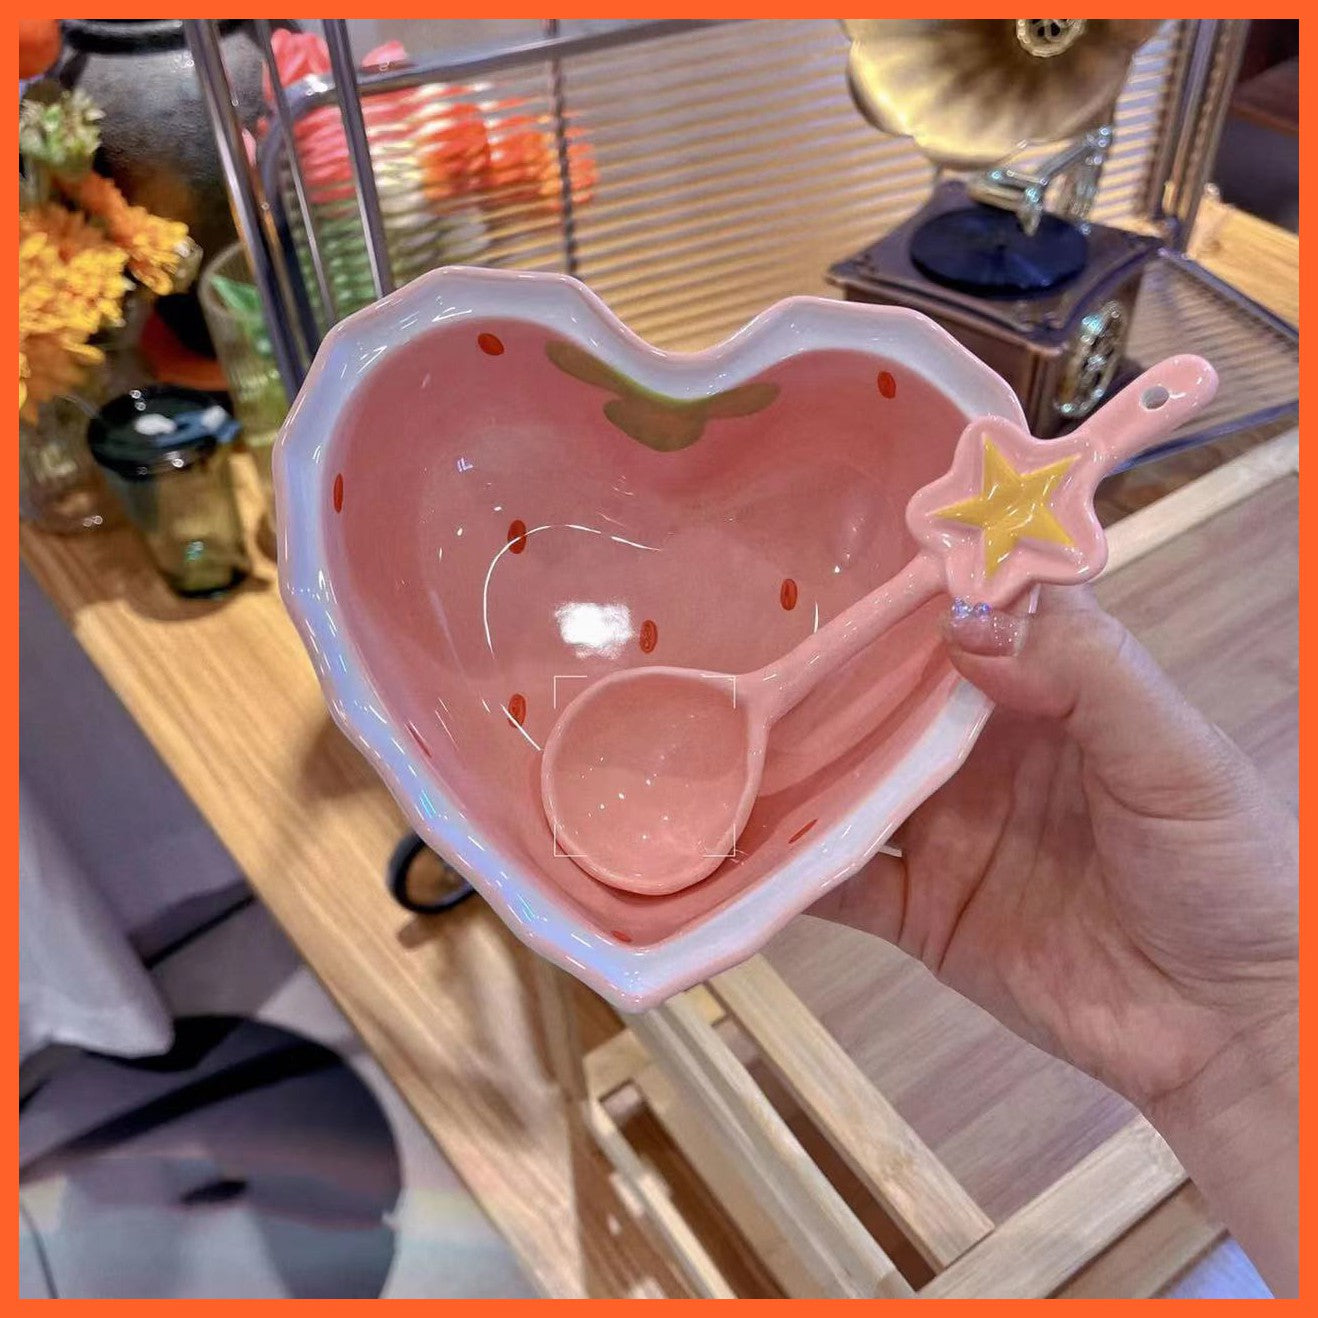 Cute Strawberry Ceramic Love Bowl Shaped